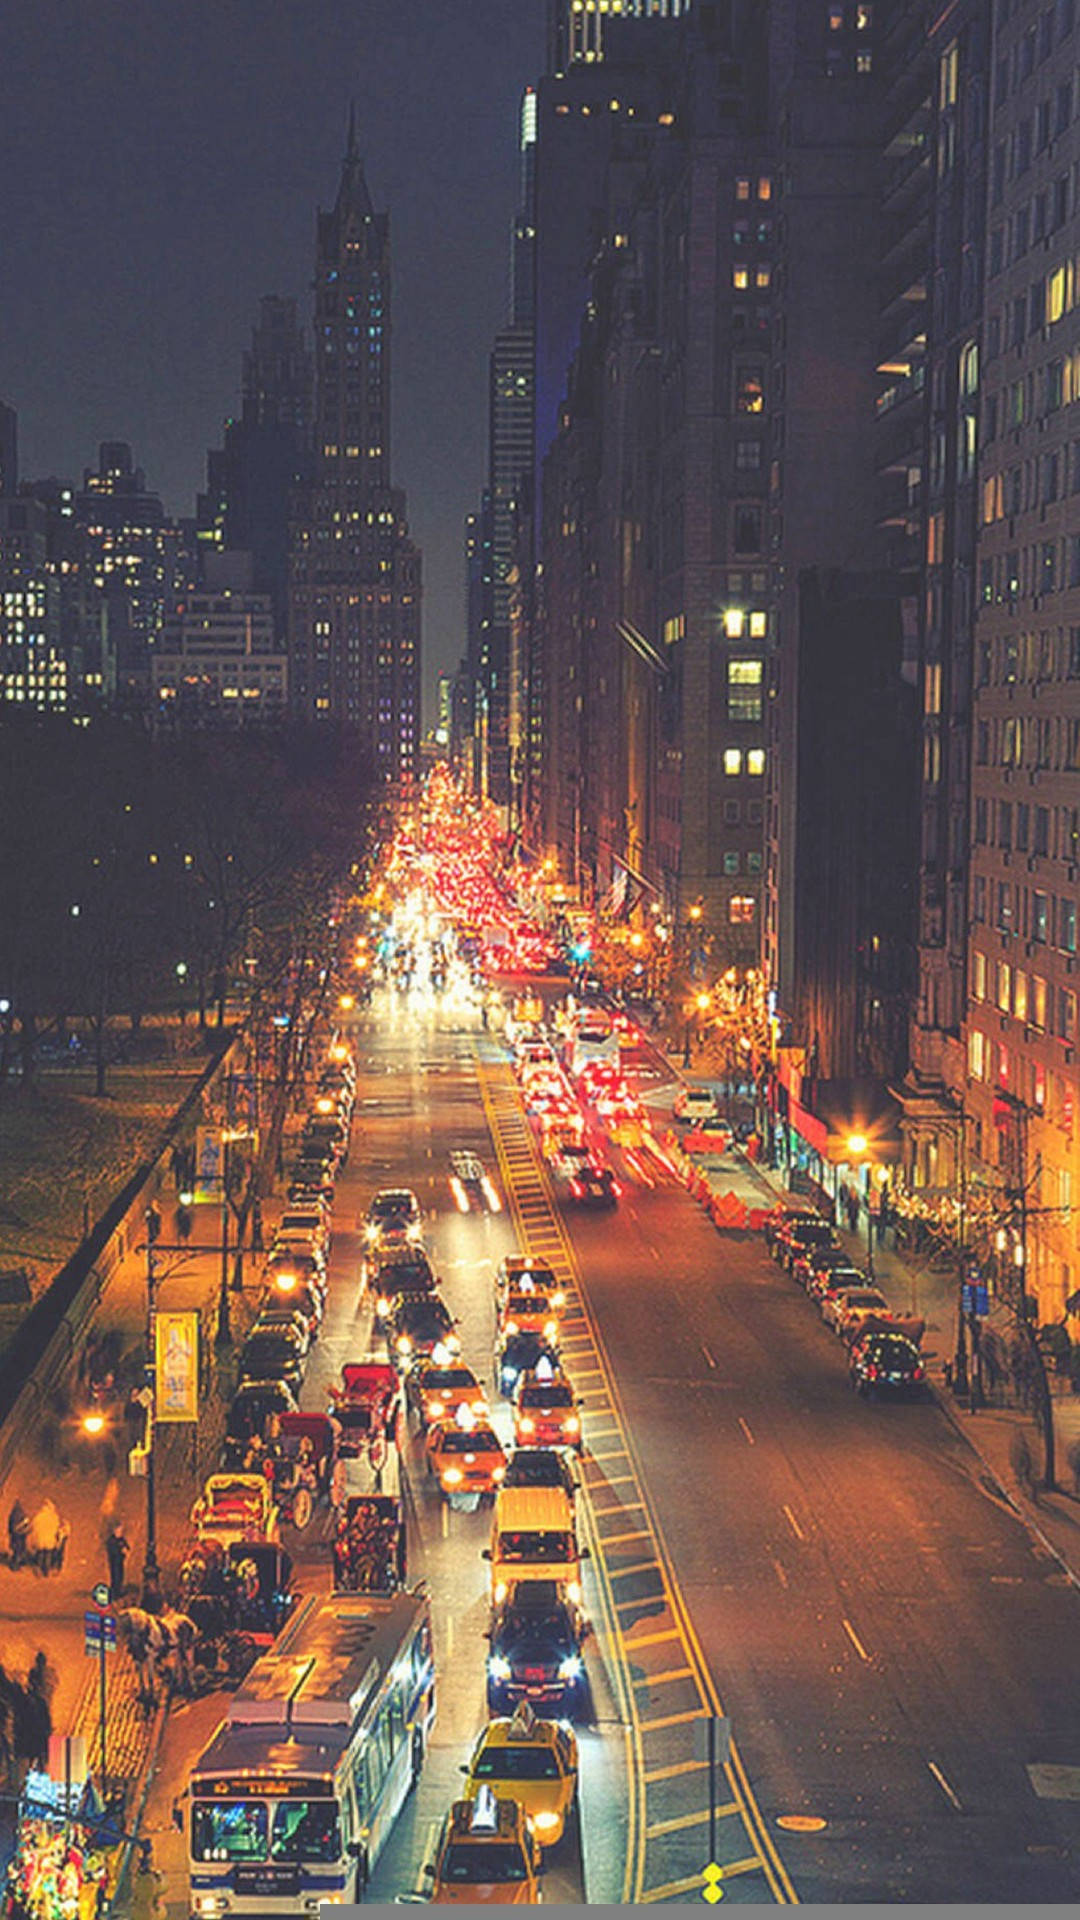 Illuminated Night Streets Of New York City Captured Through An Iphone X